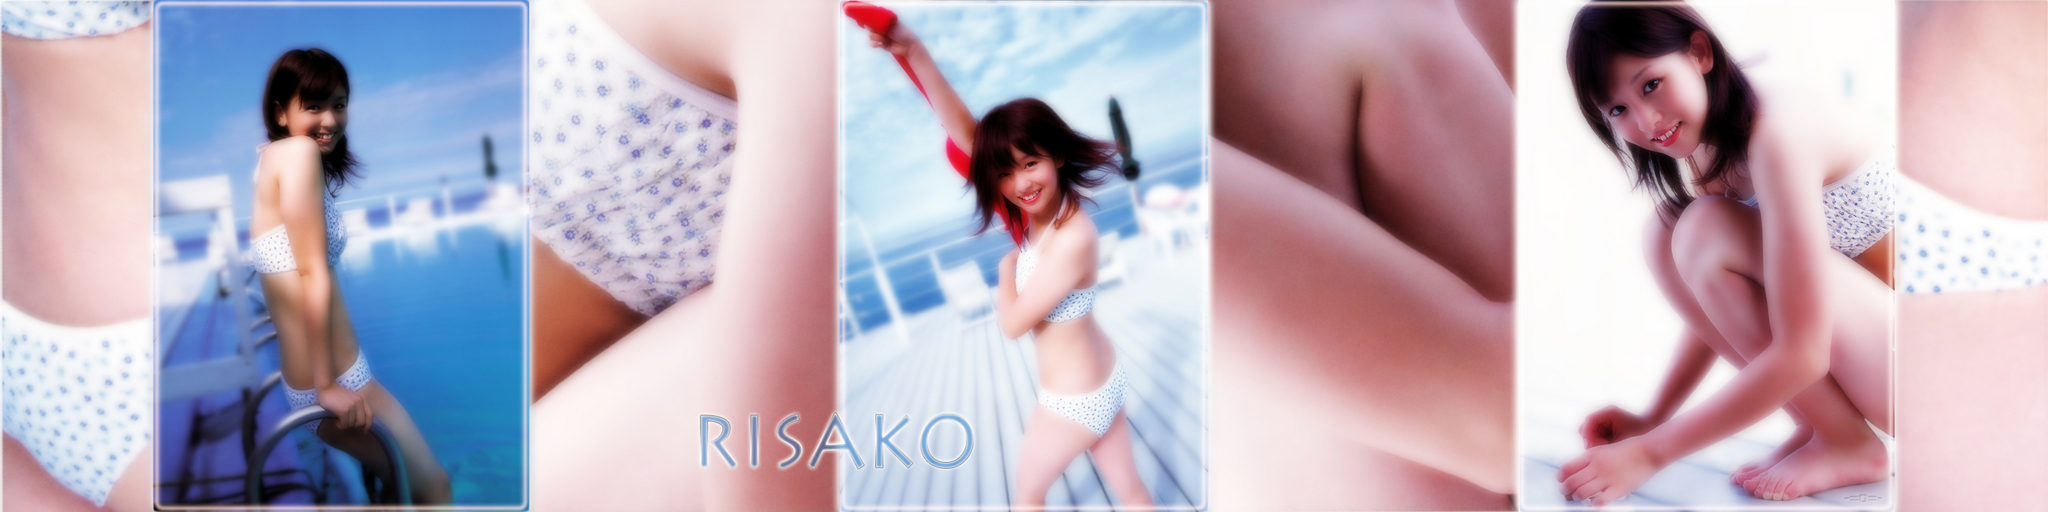 Risako-Swimsuit2.jpg